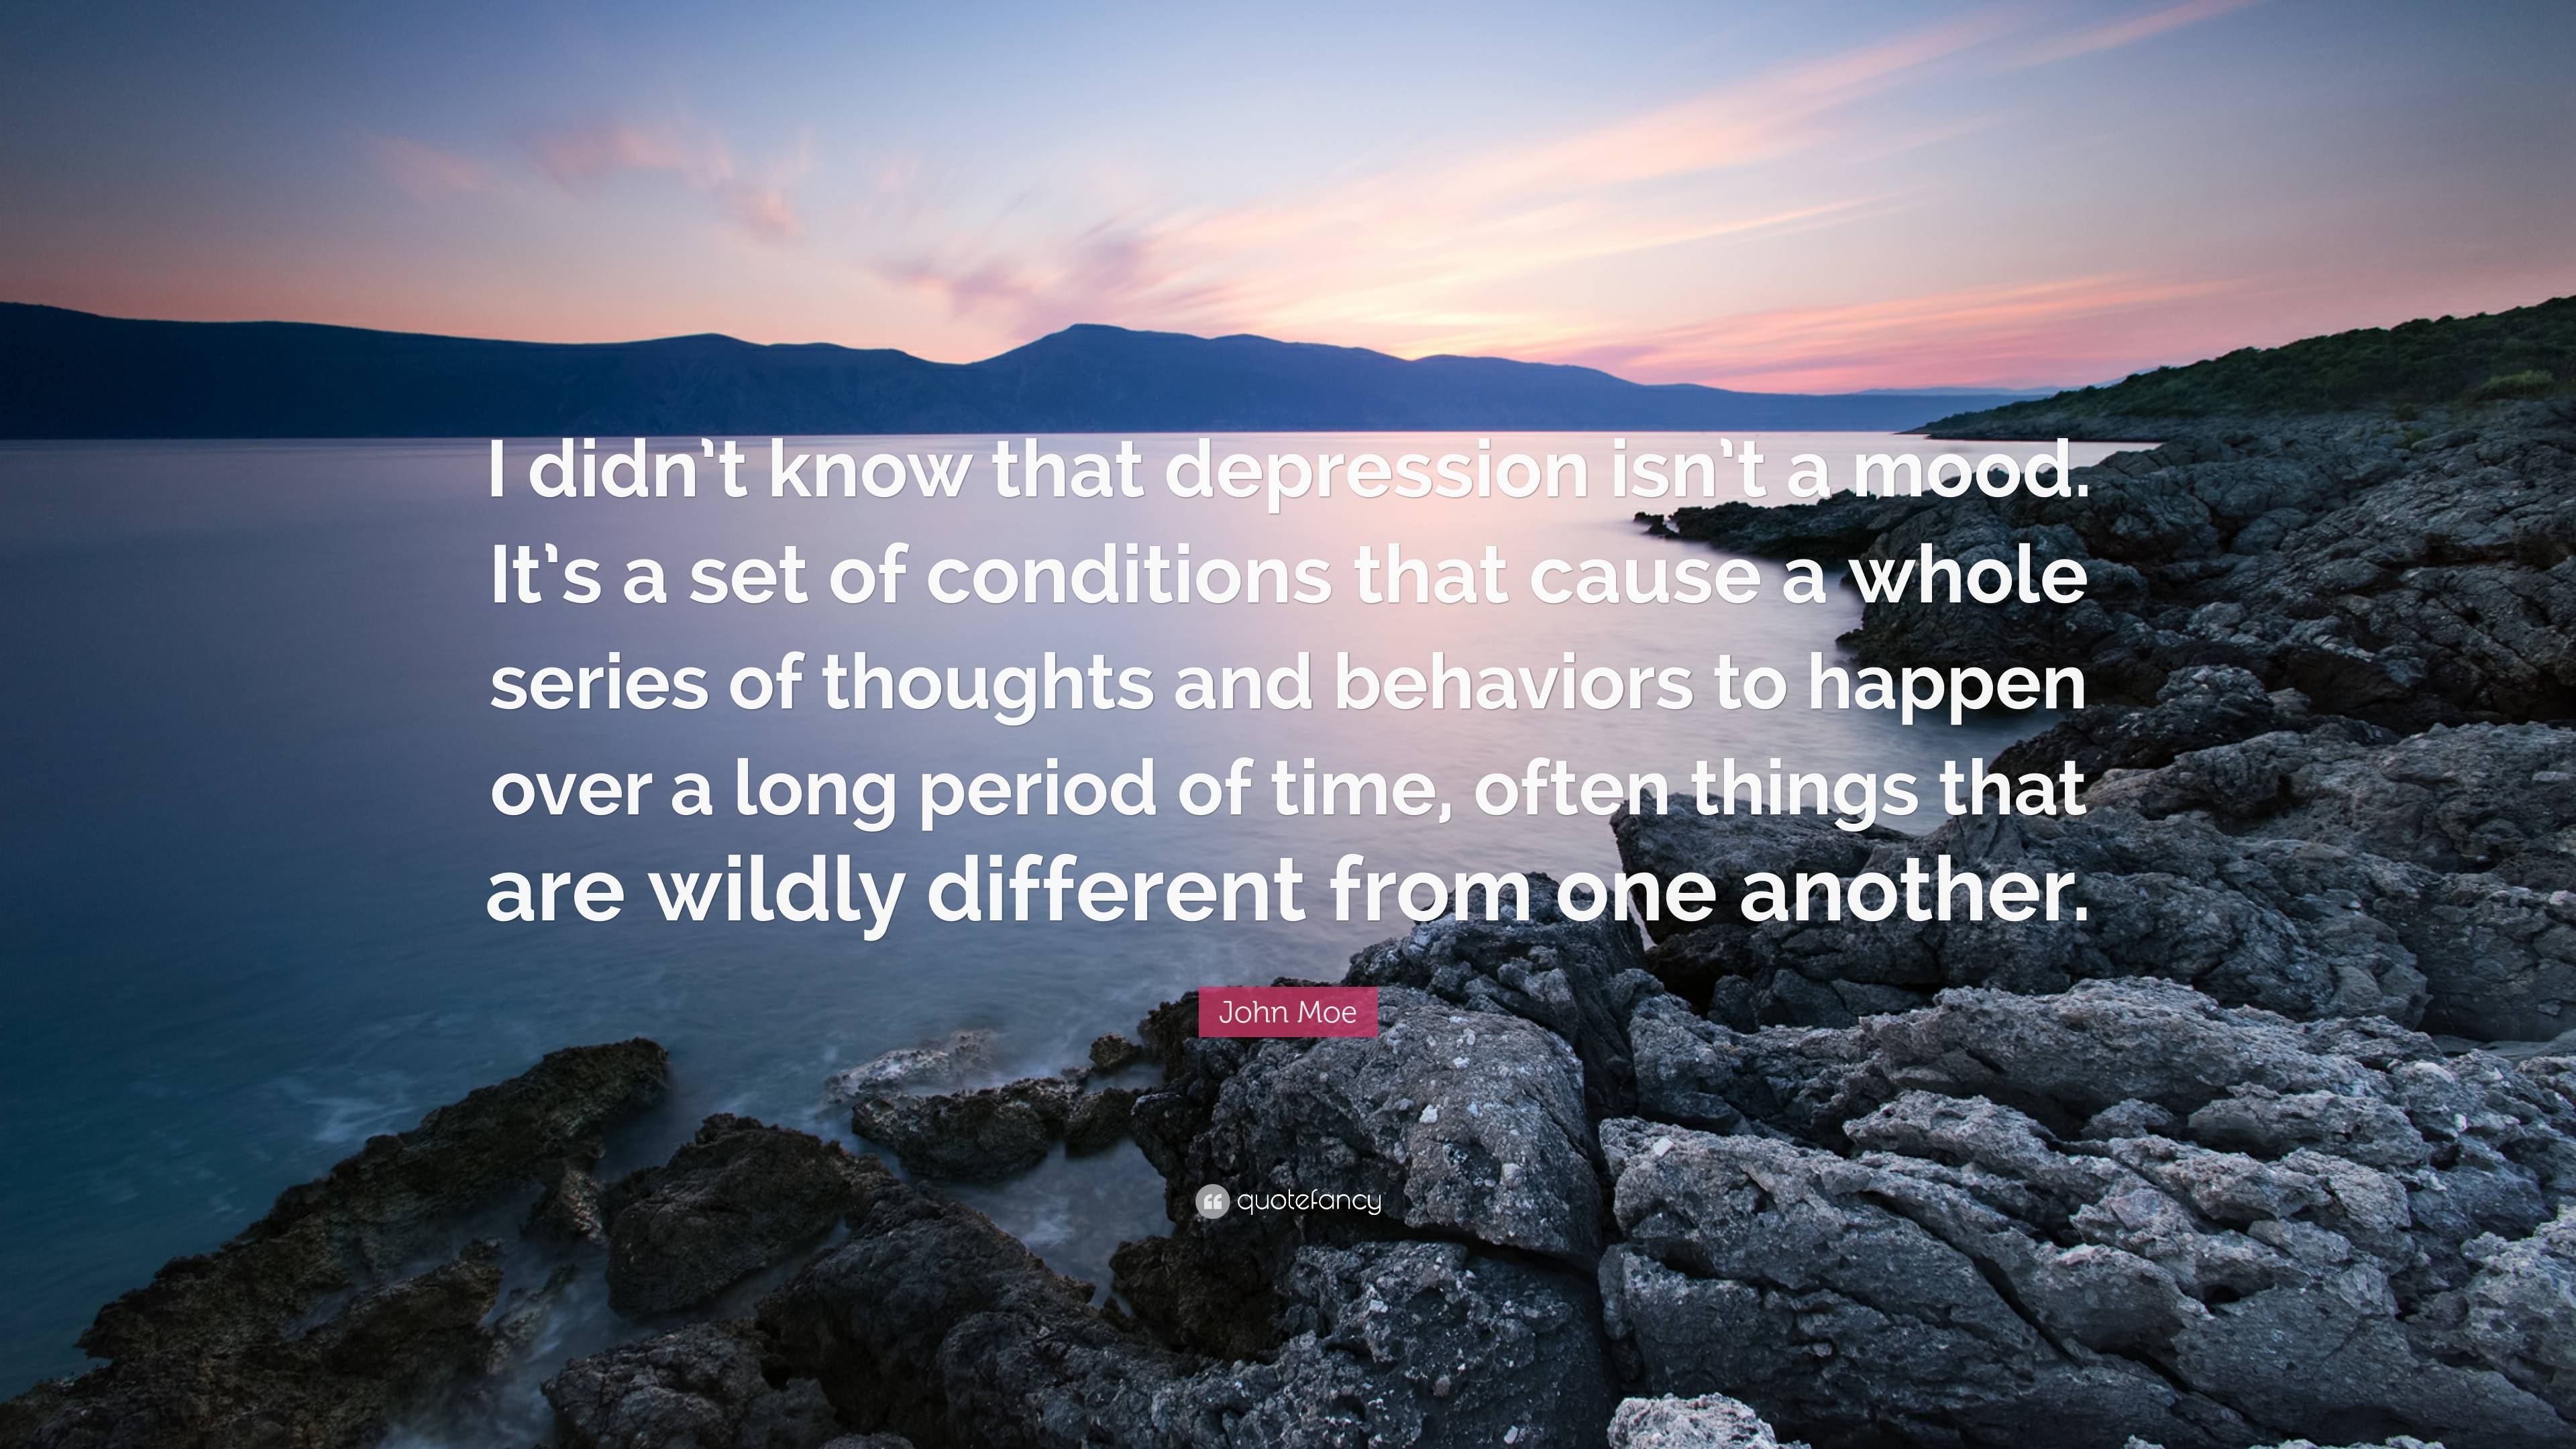 John Moe Quote: “I didn’t know that depression isn’t a mood. It’s a set ...